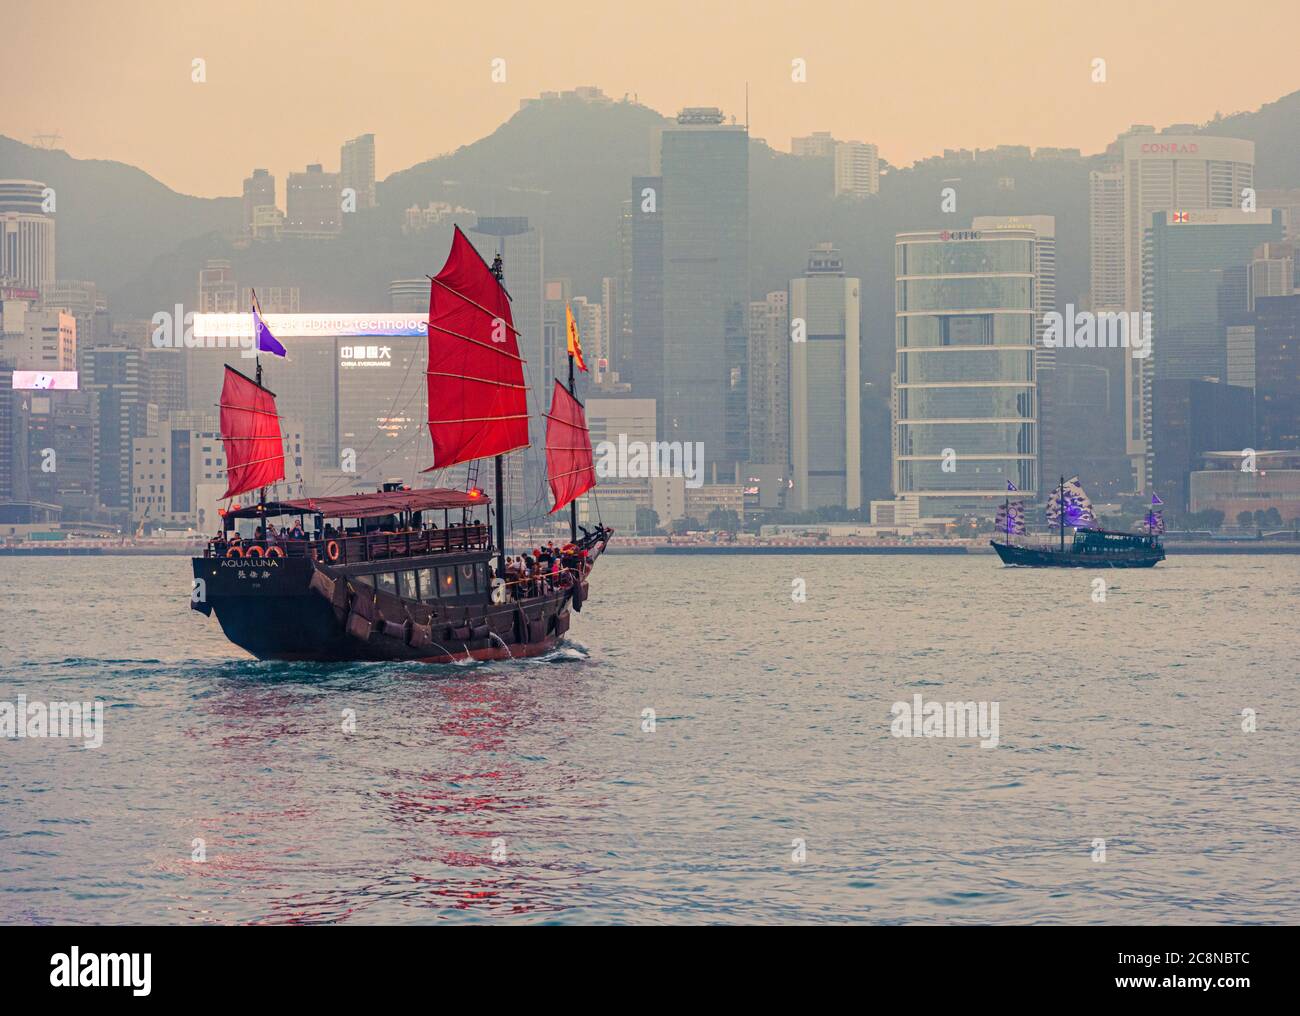 Aqualuna and Aqualuna 2 junk tourist boats on their sunset sailing, Victoria Harbour, Hong Kong Stock Photo